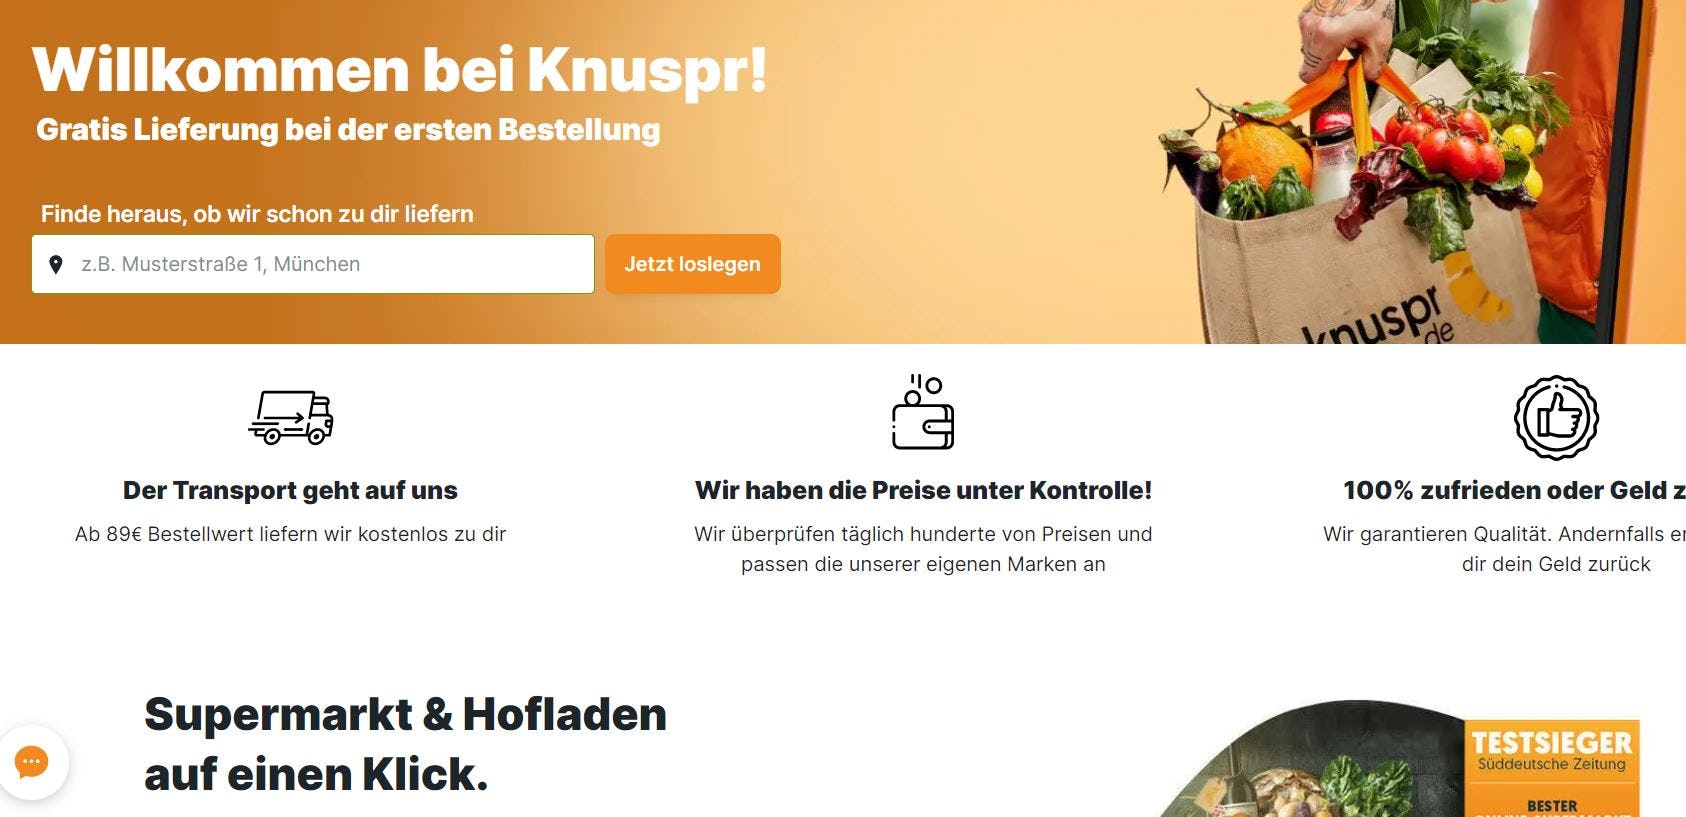 Website Knuspr